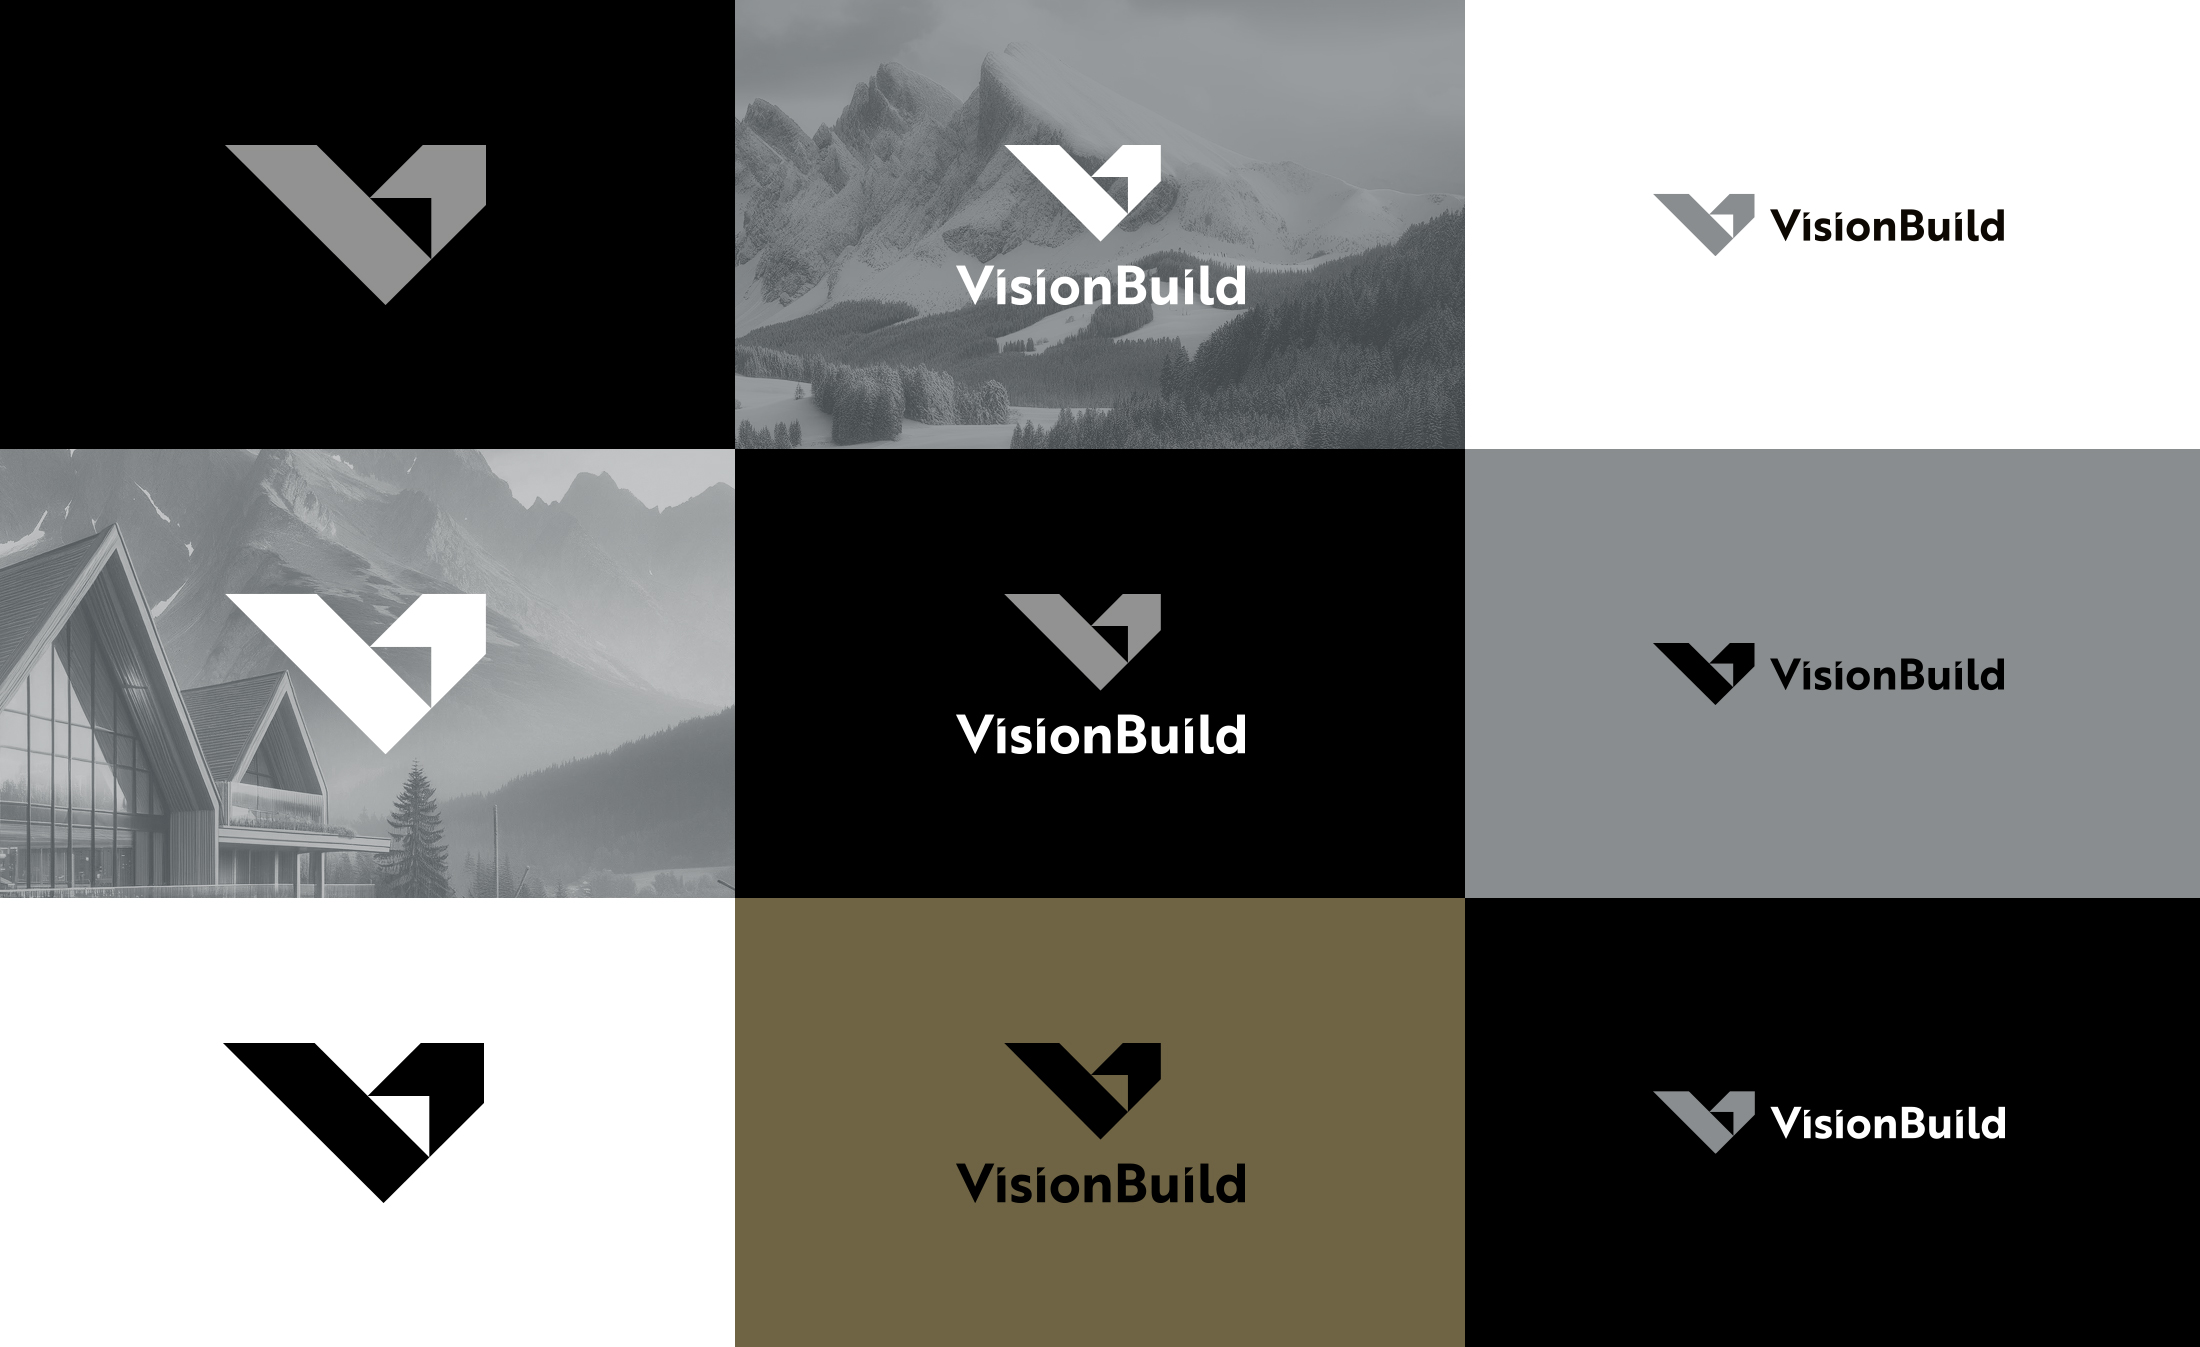 Vision Build identyfikacja wizualna / Kuba Malicki